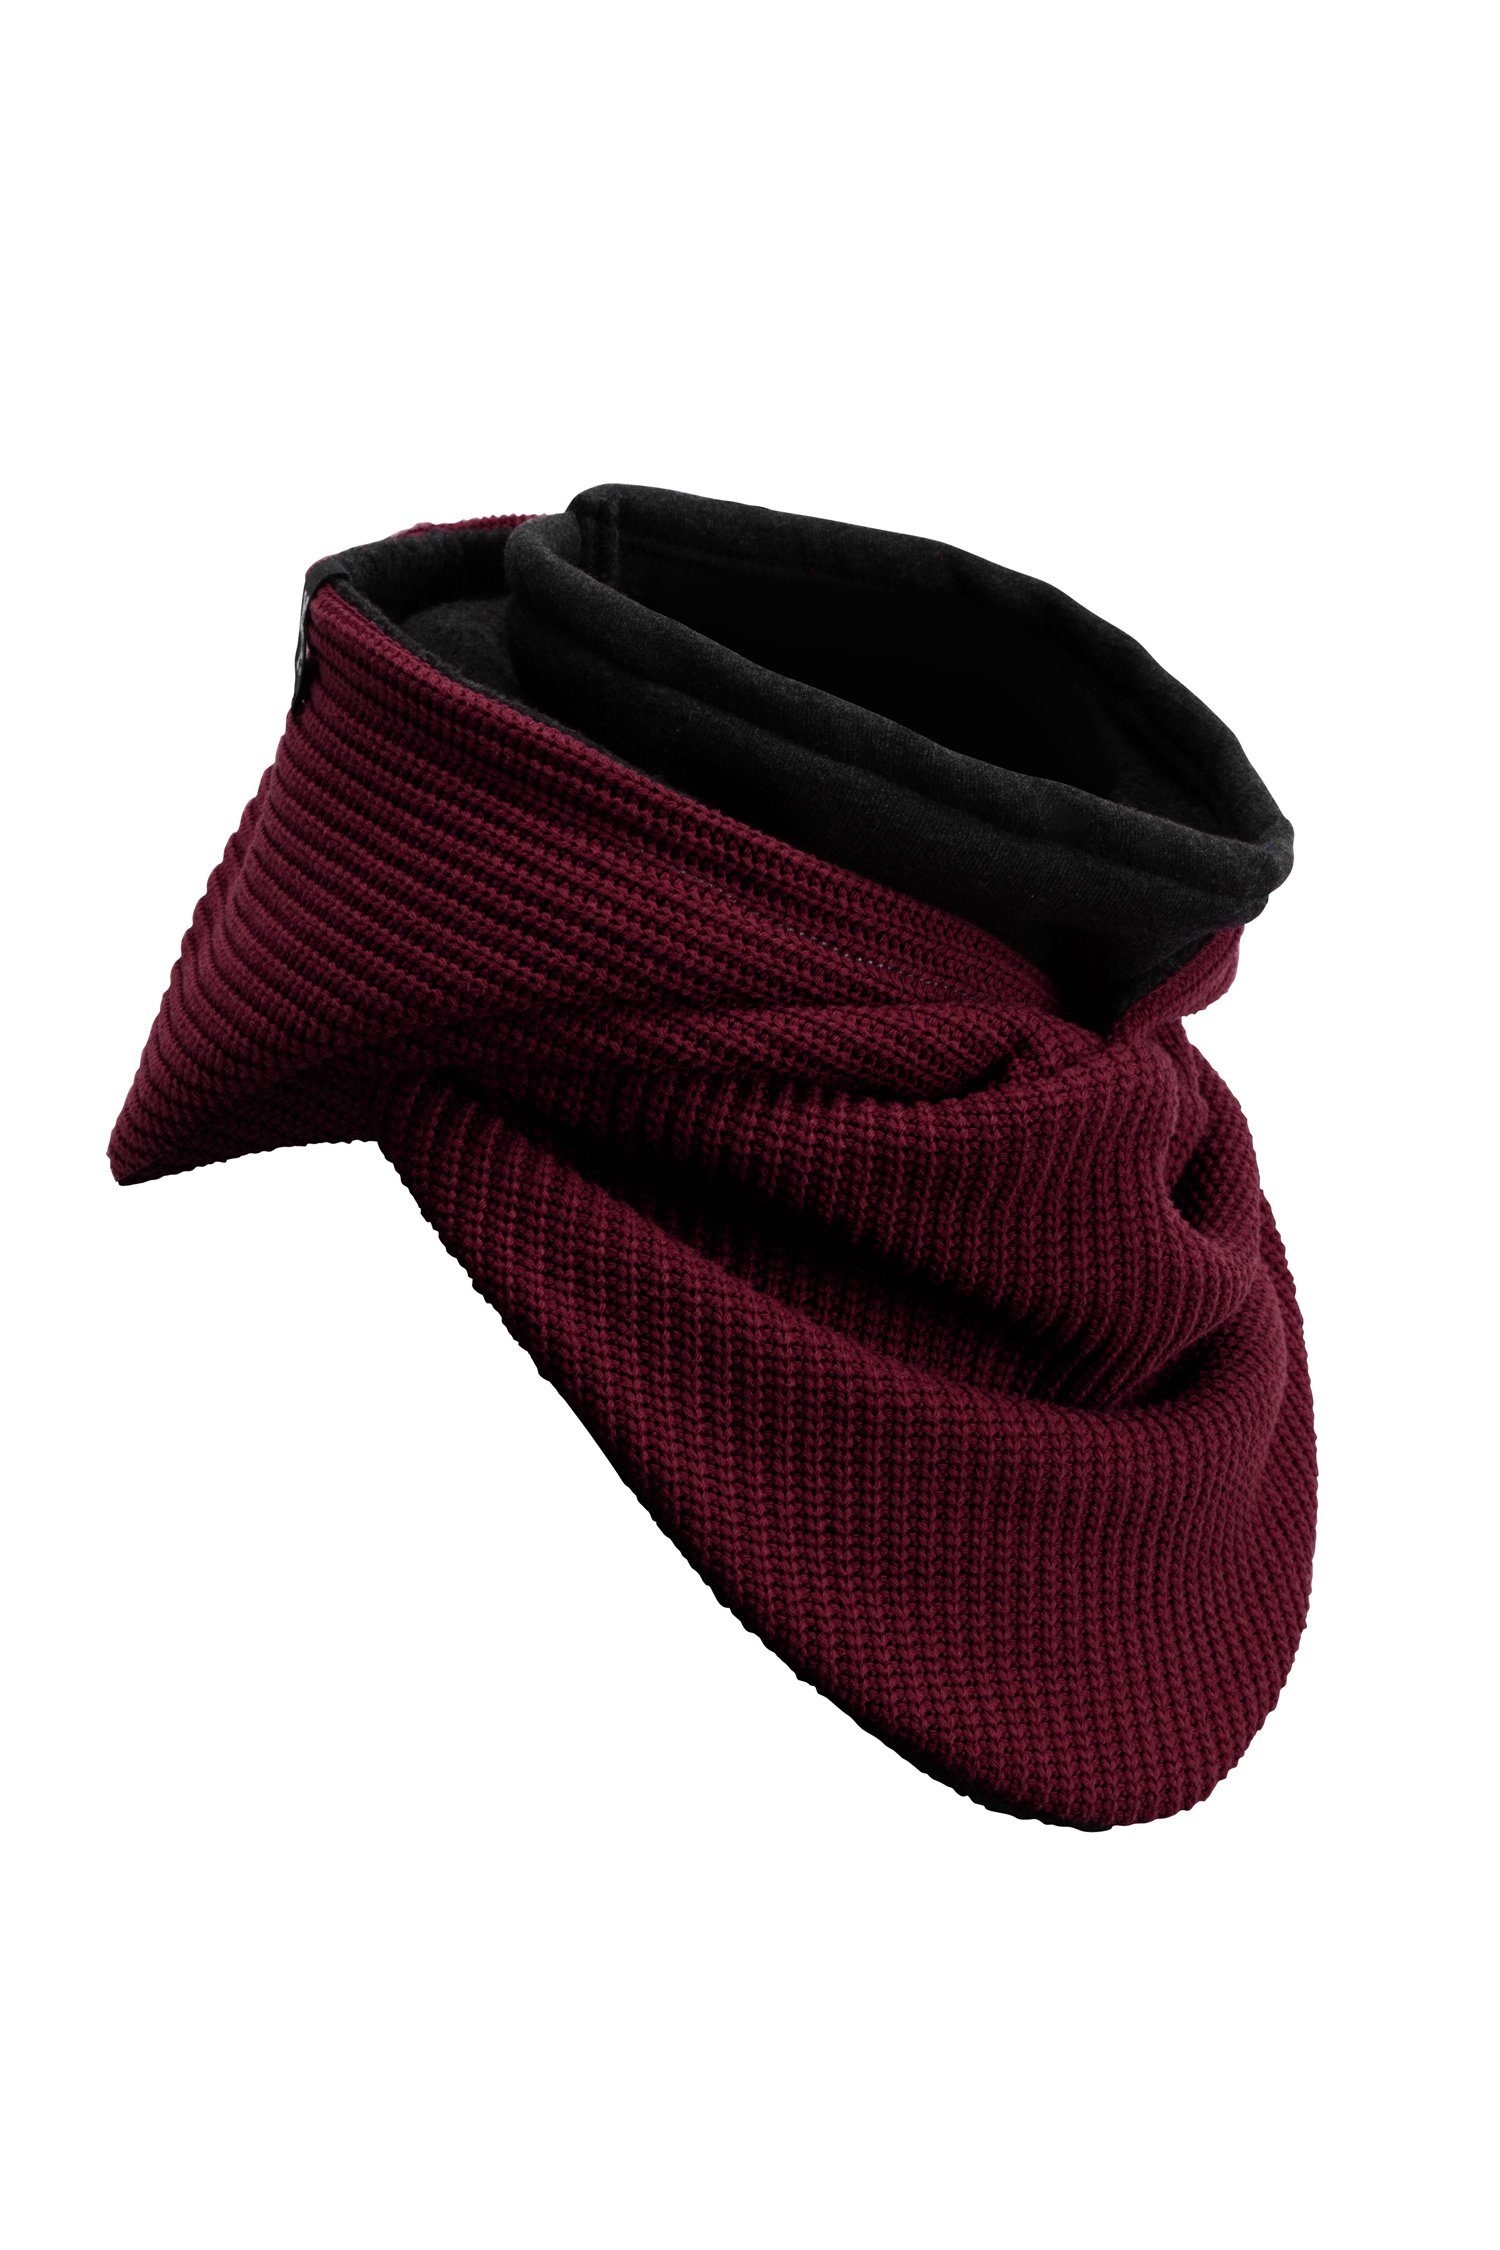 Manufaktur13 Modeschal Knit Hooded Loop - Kapuzenschal, Schal, Strickschal, mit integriertem Windbreaker Bordeaux